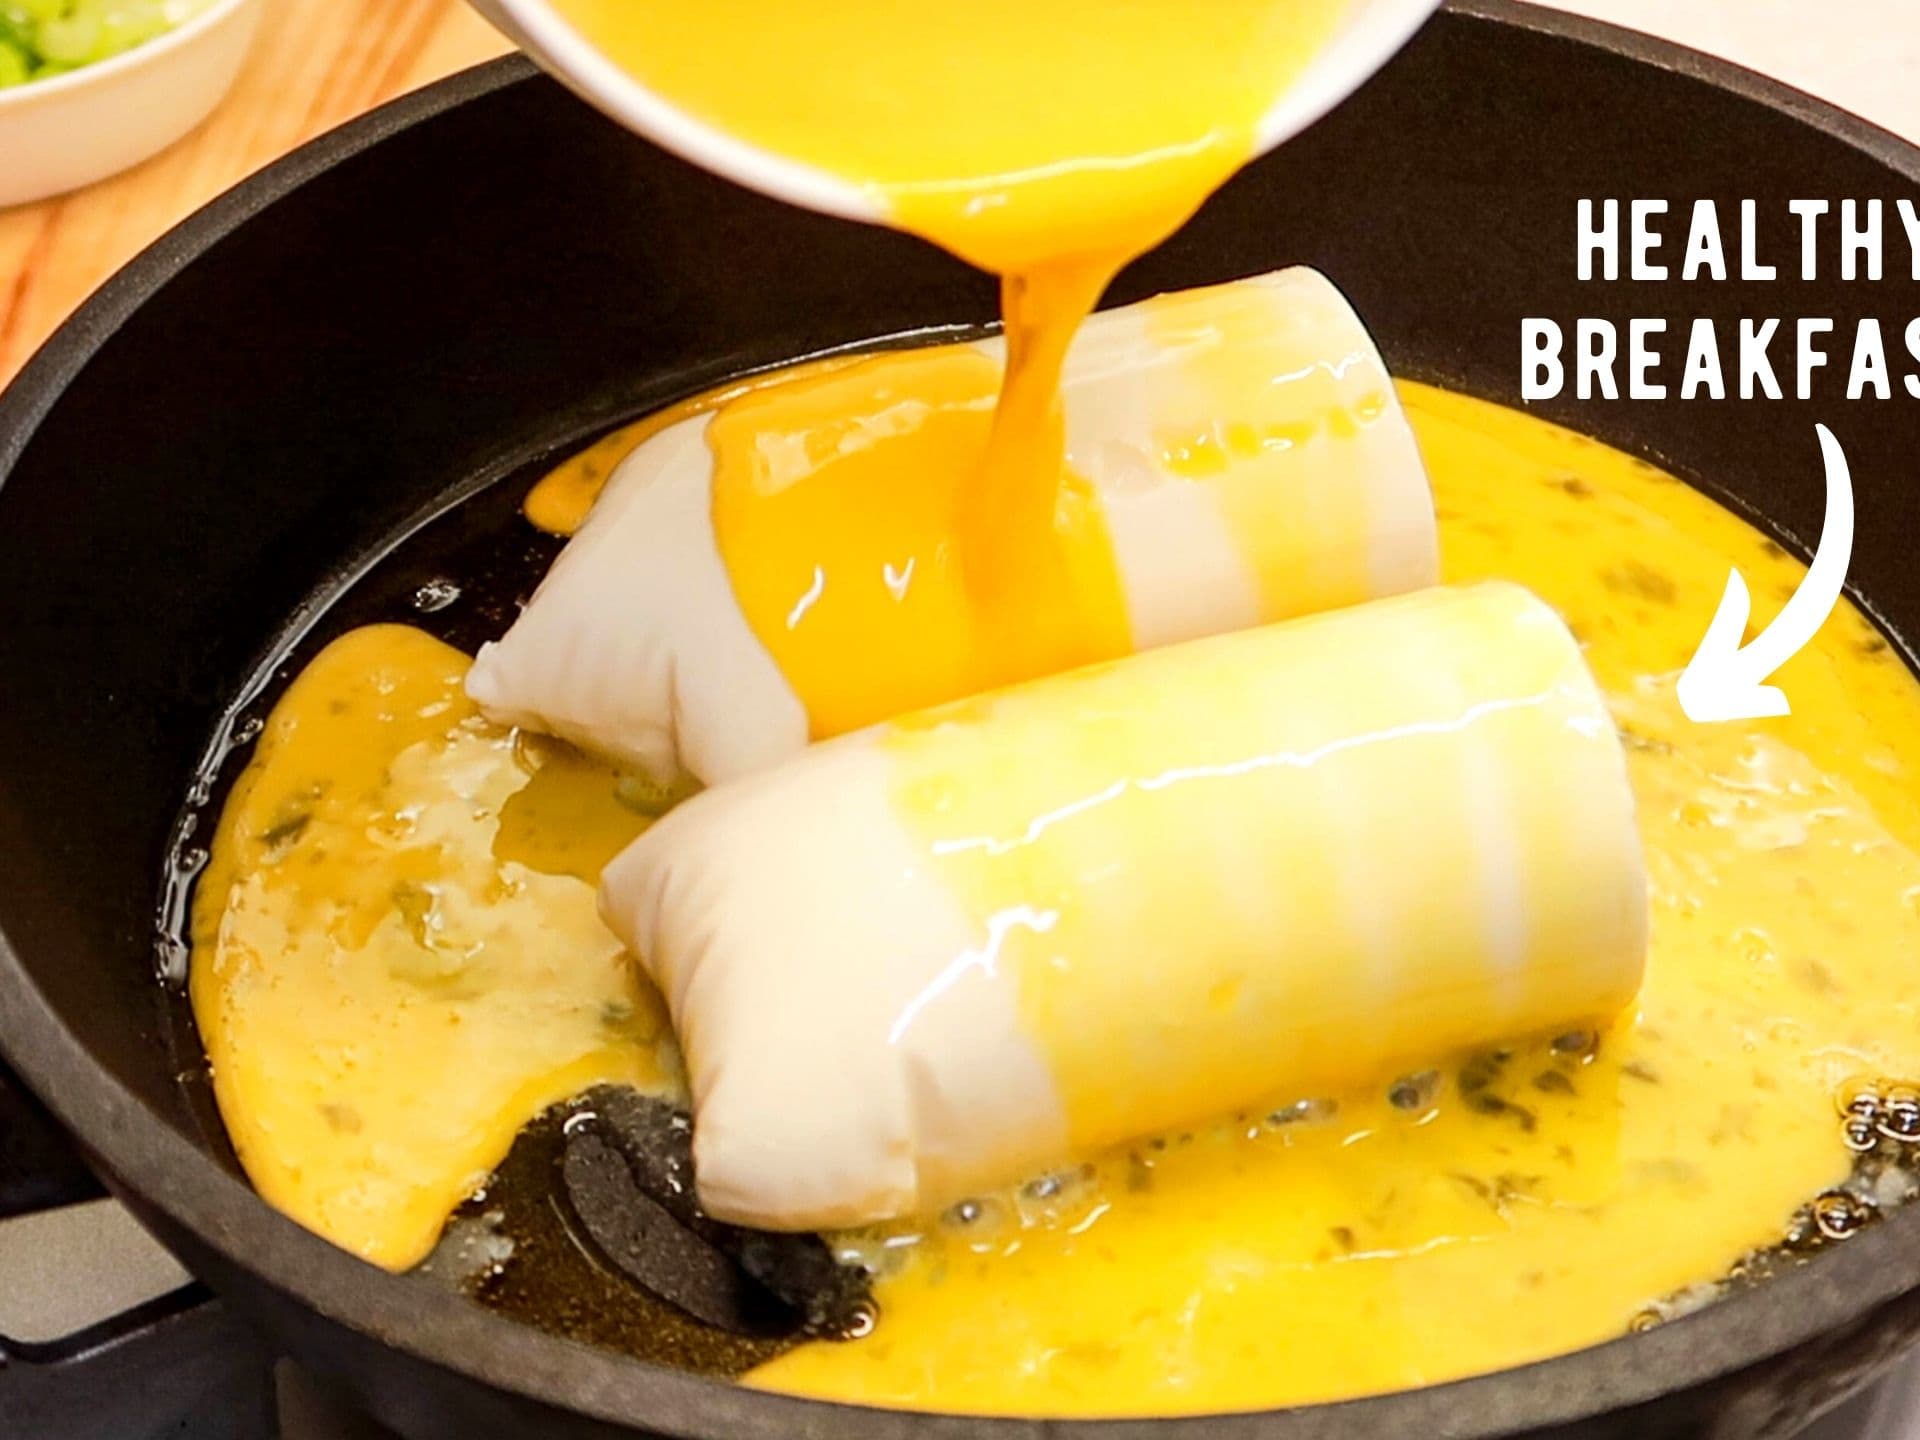 Korean Scrambled Eggs - For Urgent Mornings! – FutureDish